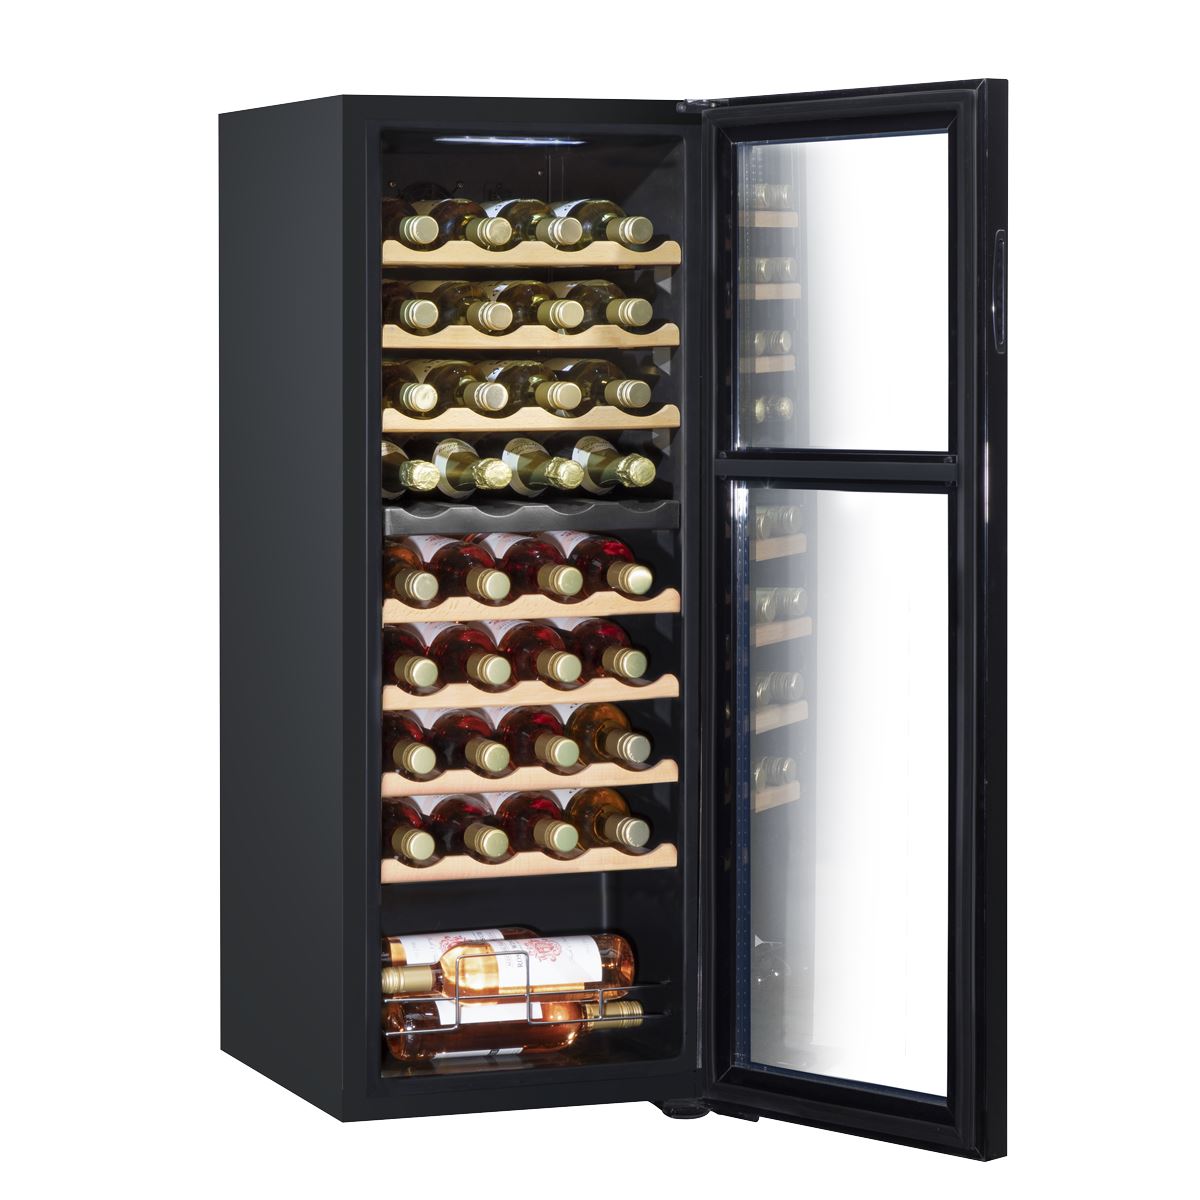 Baridi 36 Bottle Dual Zone Wine Cooler, Fridge with Digital Touchscreen Controls, Wooden Shelves & LED Light, Black